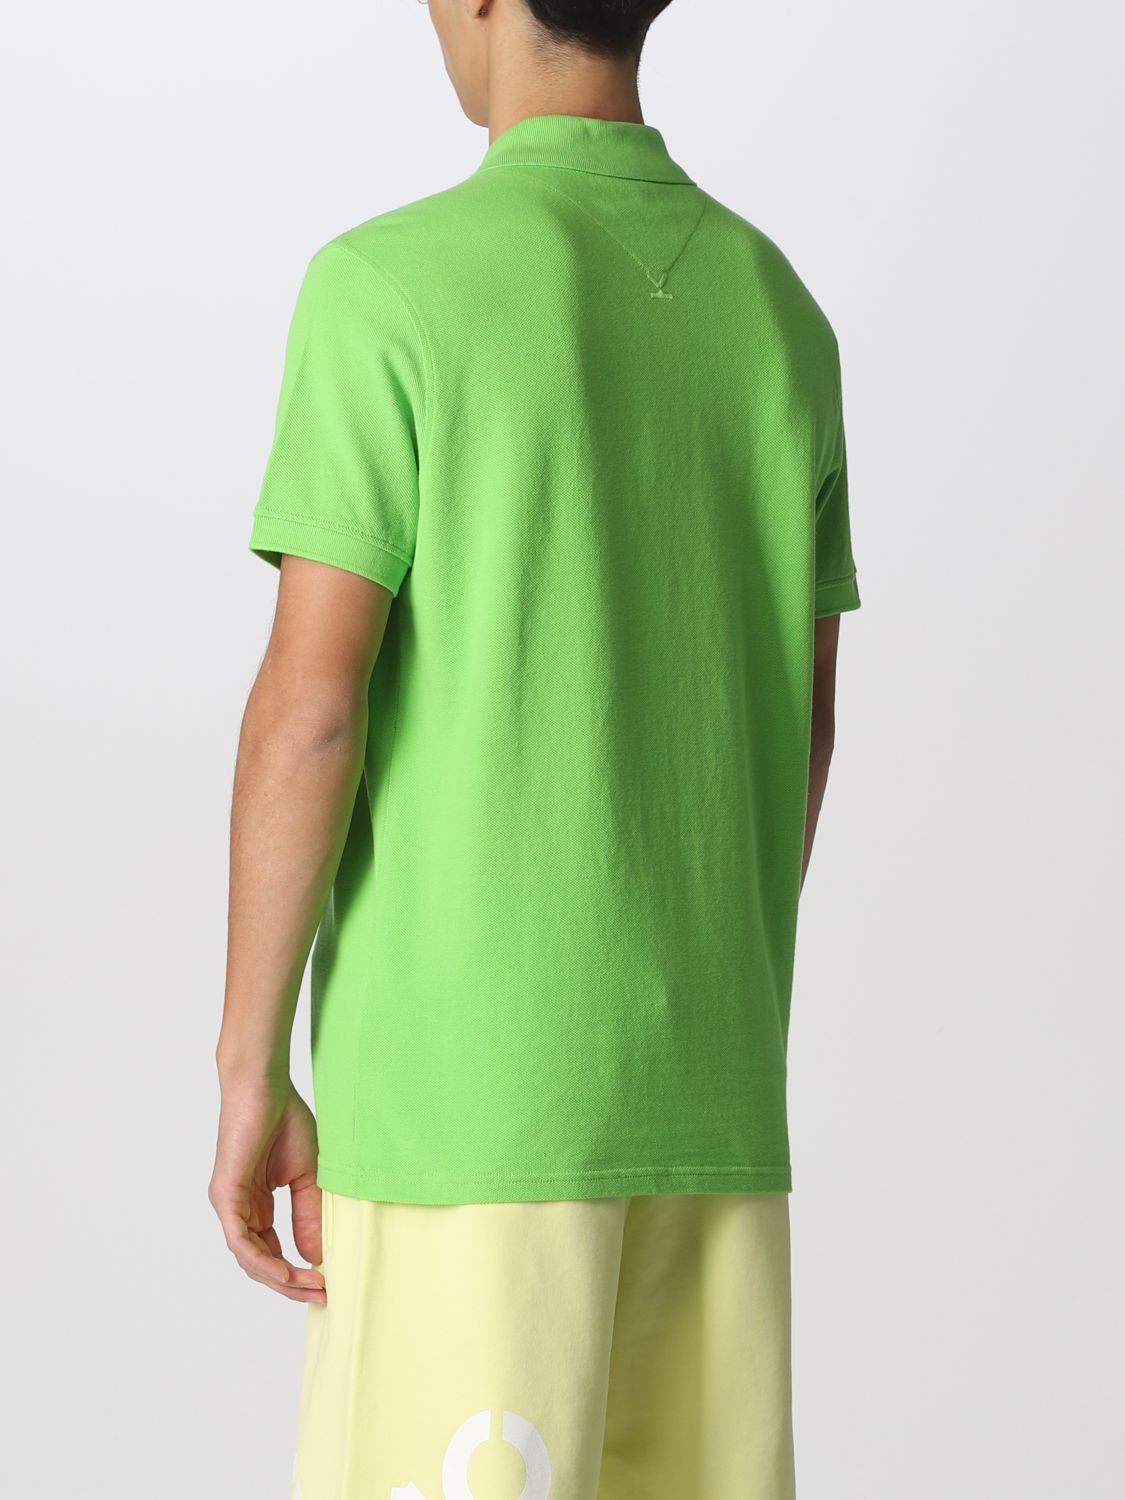 KENZO: cotton polo shirt with Tiger patch - Green | Kenzo polo shirt ...